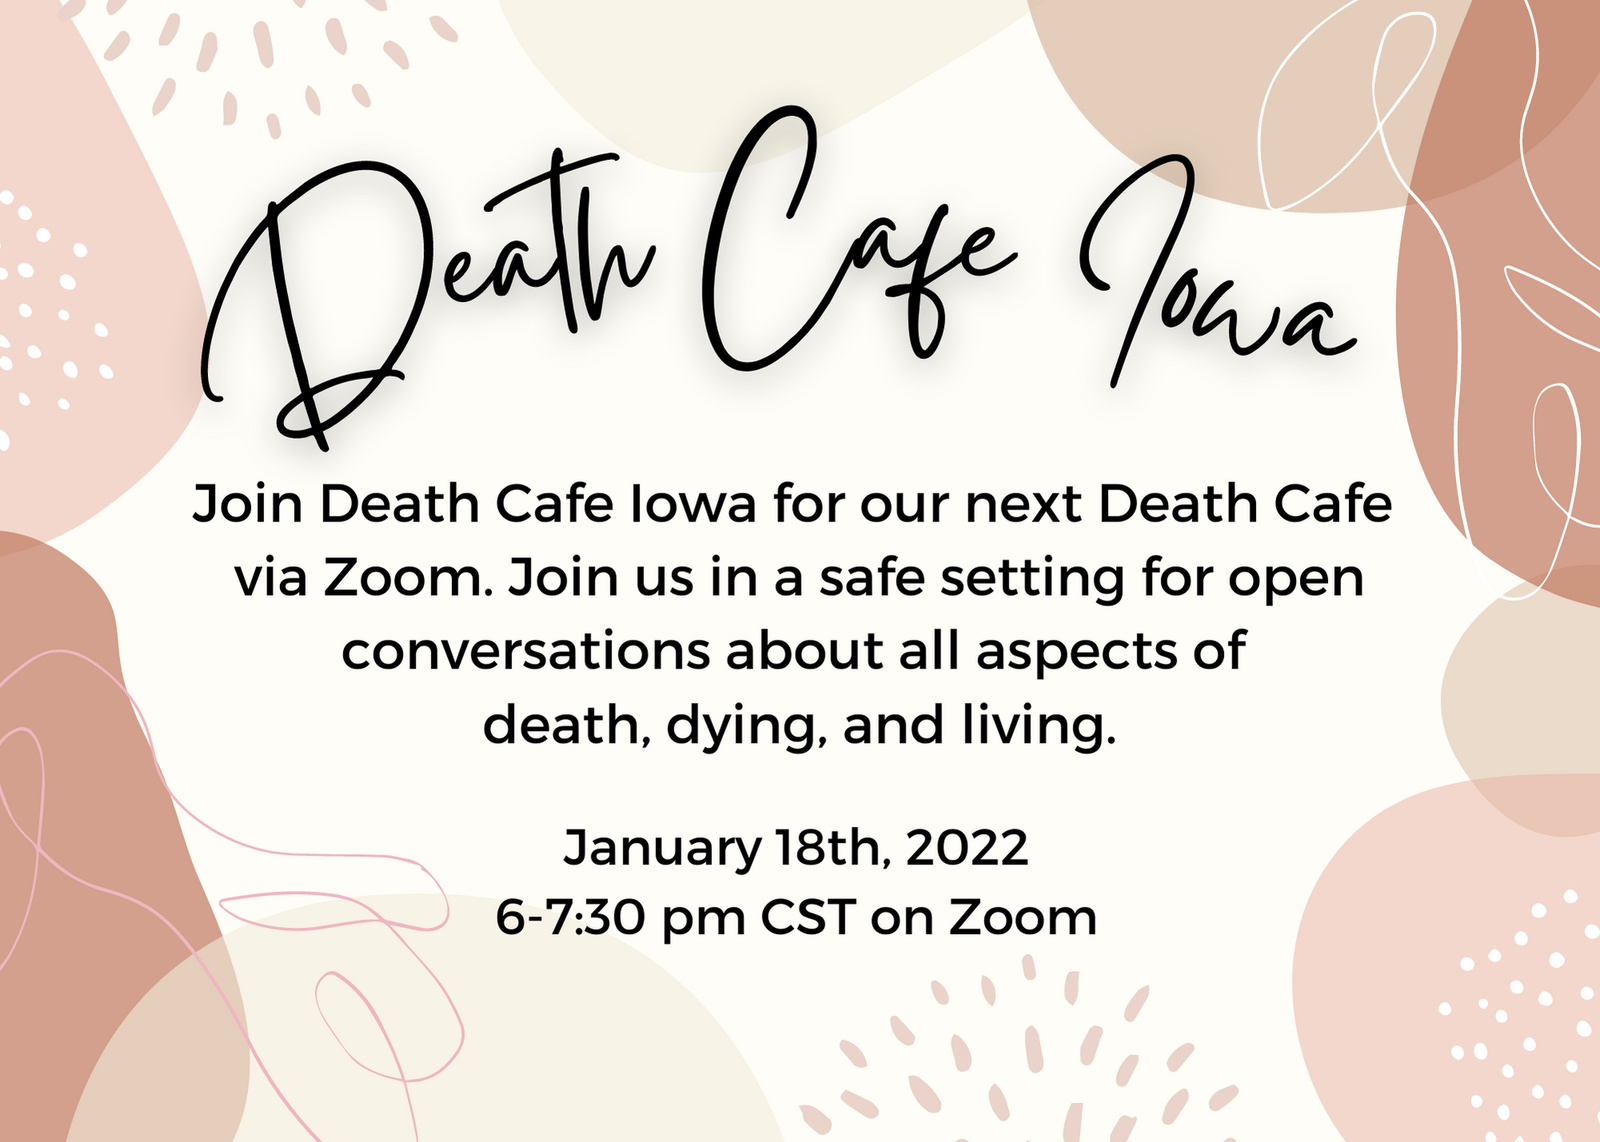 January Online Death Cafe Iowa CST